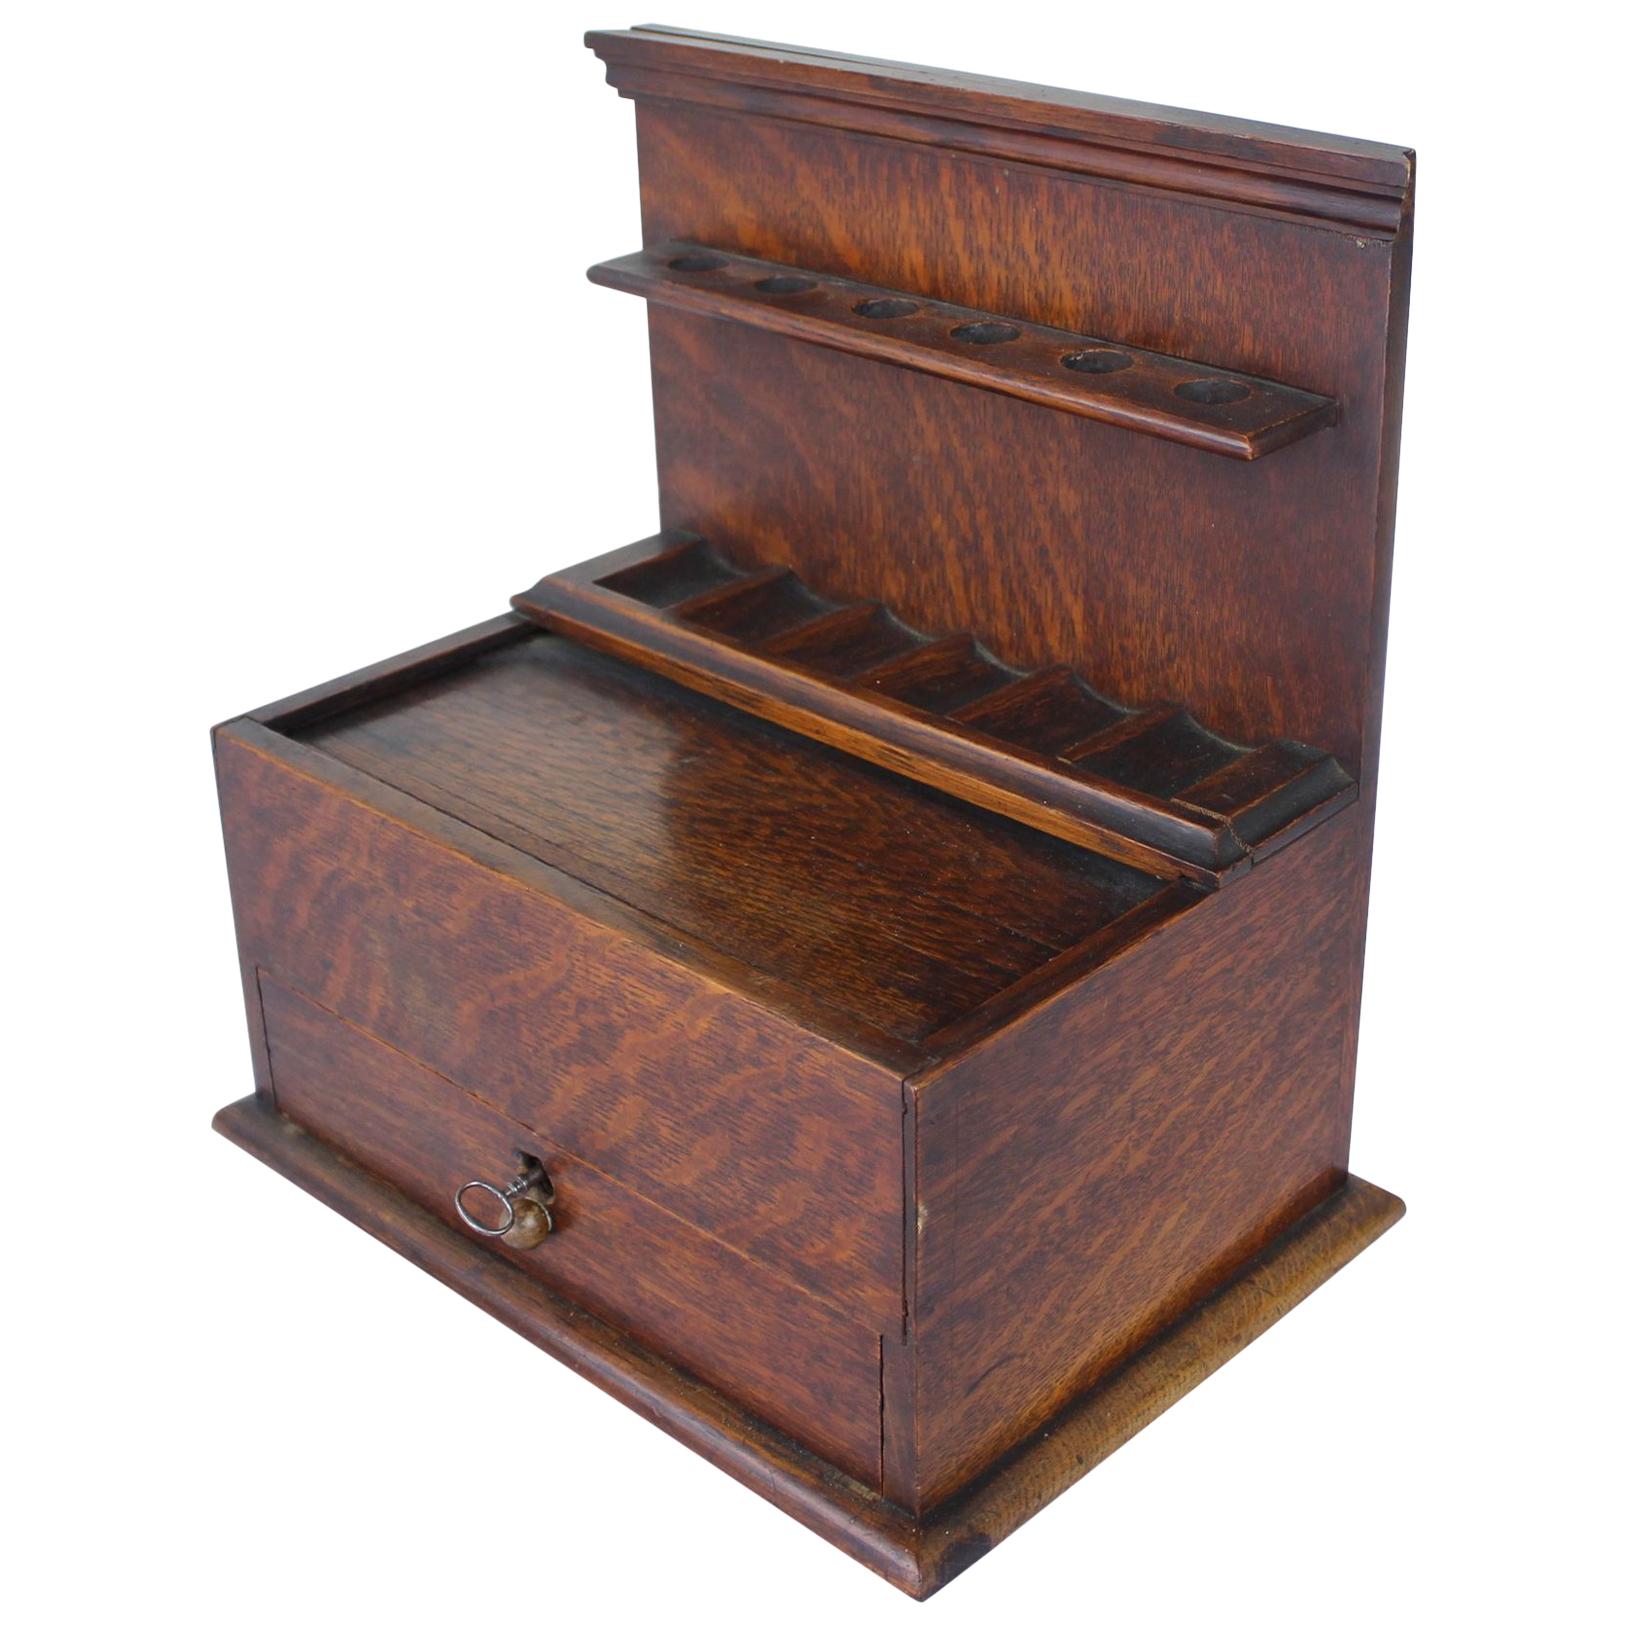 Antique English Smoking Box